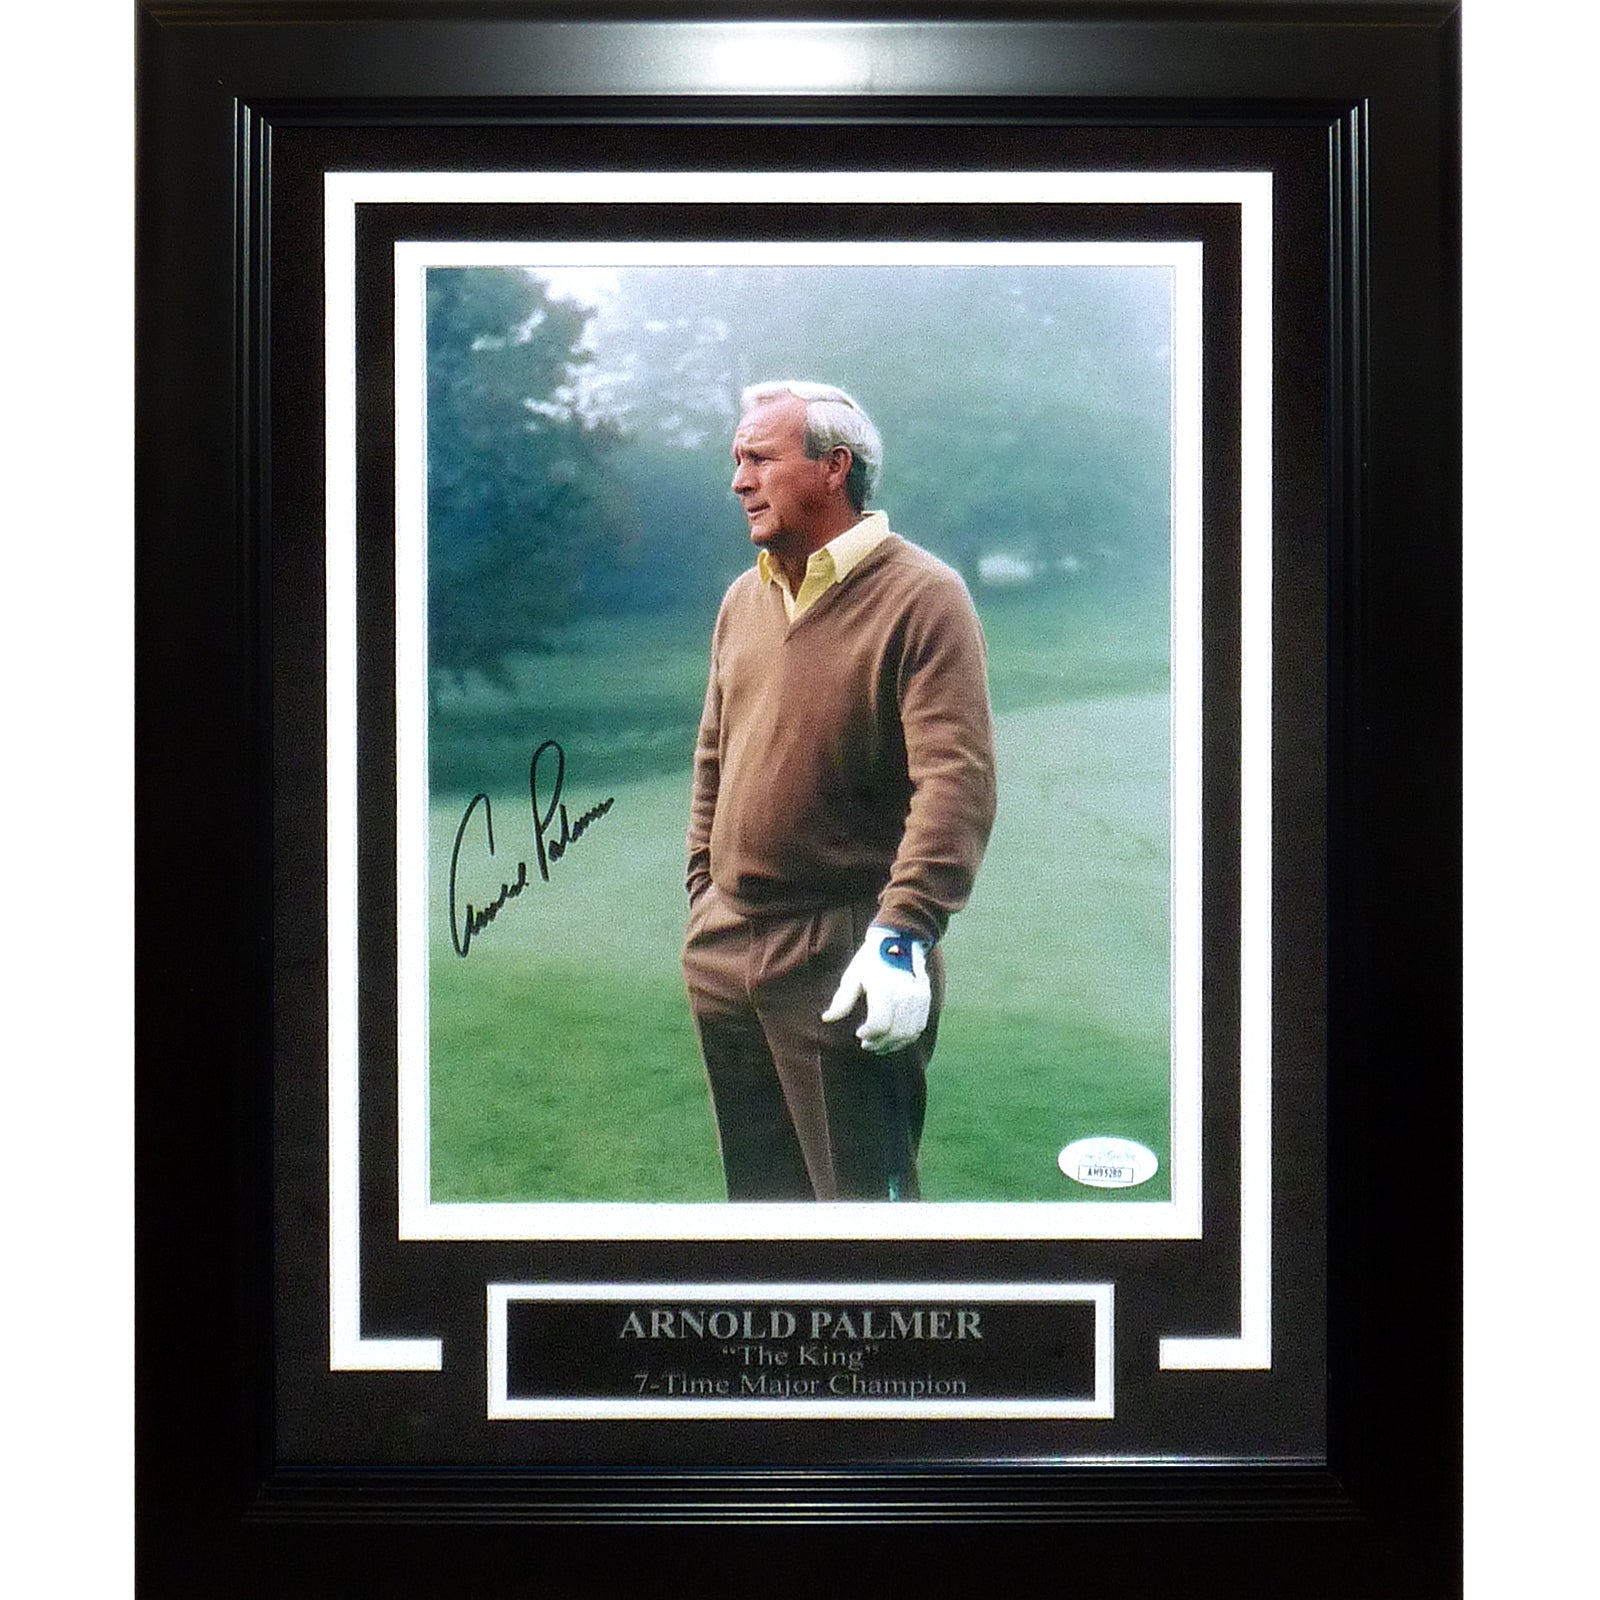 Arnold Palmer Autographed Golf Deluxe Framed 8x10 Photo - JSA